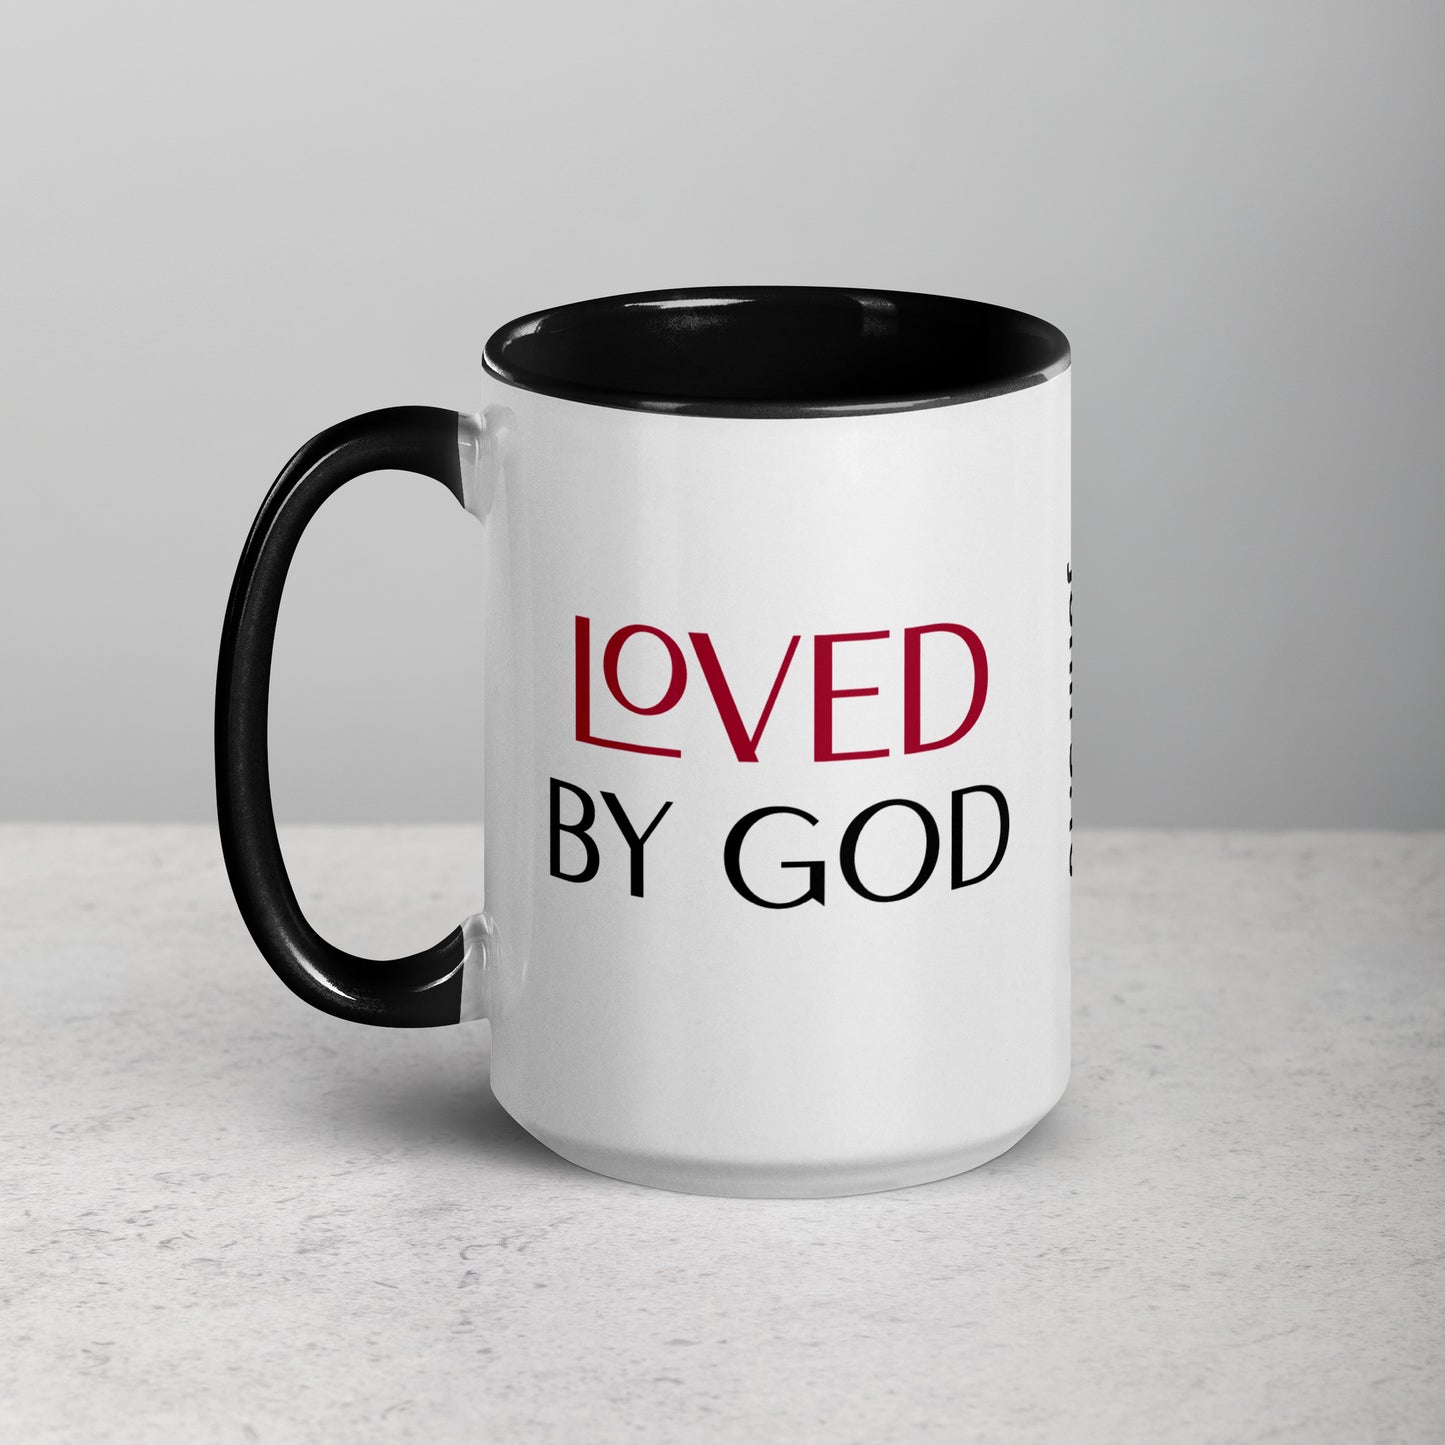 John 3:16 LOVED BY GOD Mug (Large 15 0z) - LIMITED EDITION RELEASE